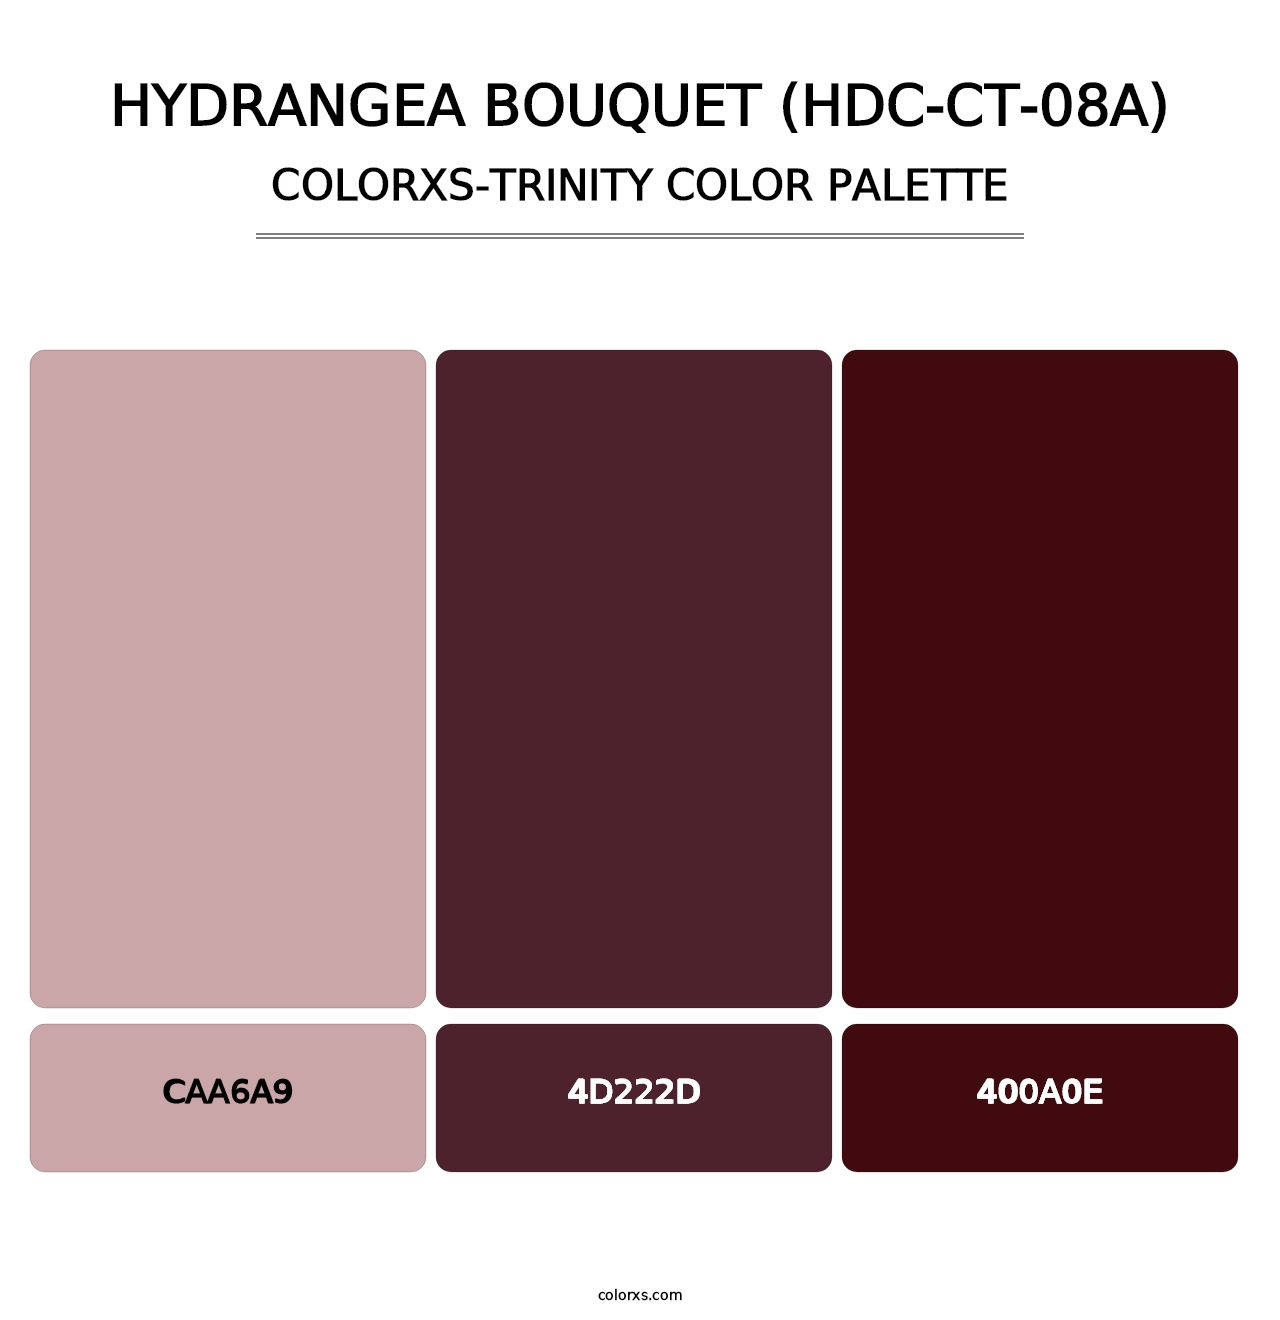 Hydrangea Bouquet (HDC-CT-08A) - Colorxs Trinity Palette